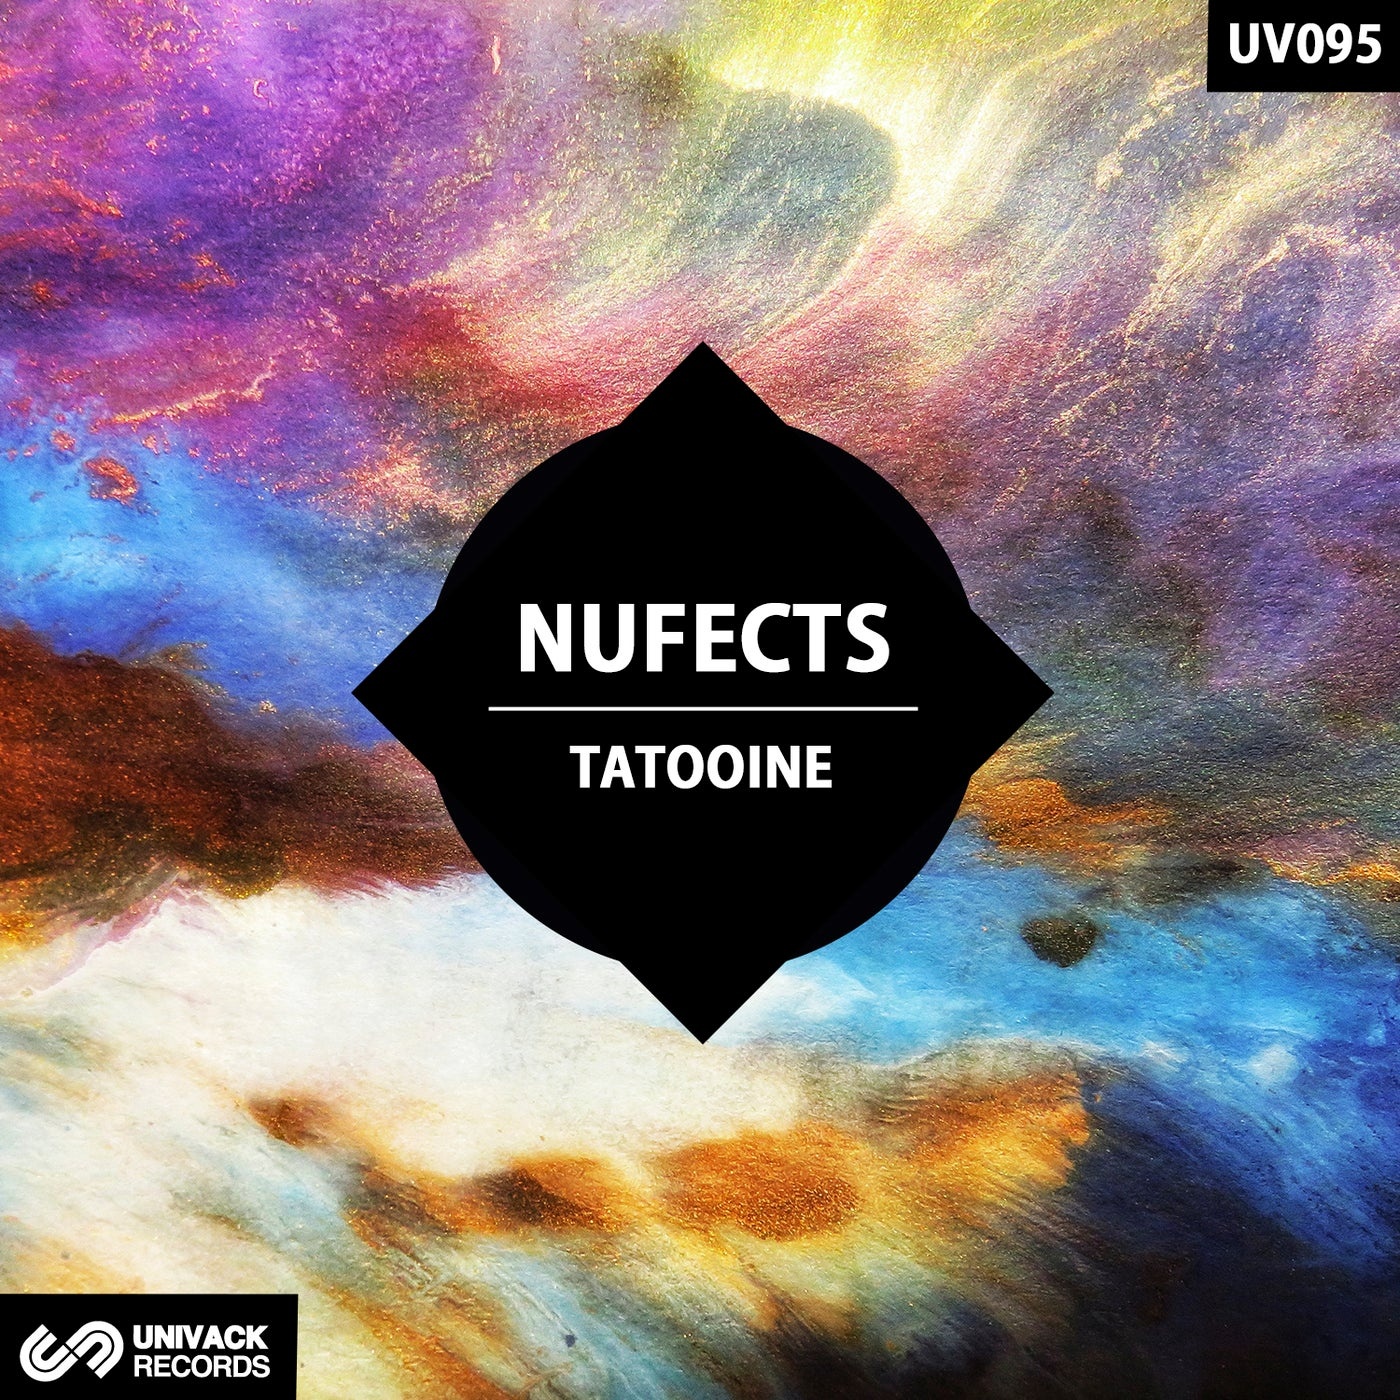 NuFects - Tatooine [UV095]